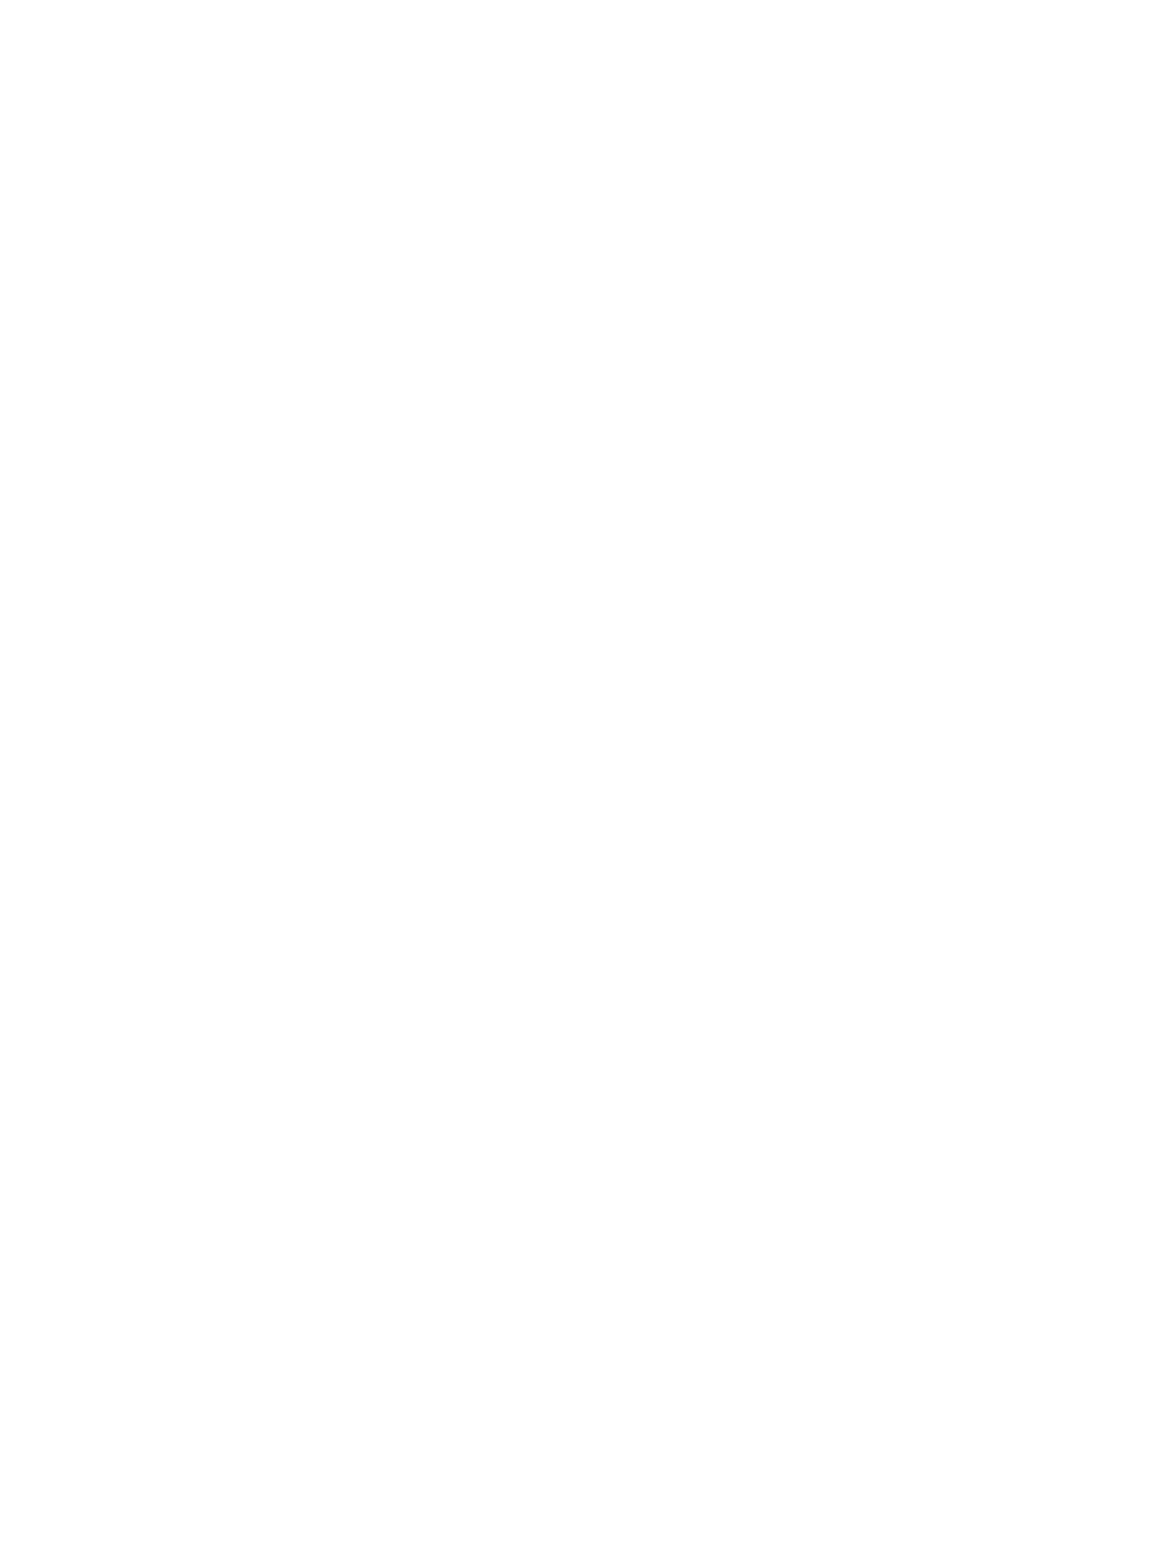 SYNLAB logo for dark backgrounds (transparent PNG)